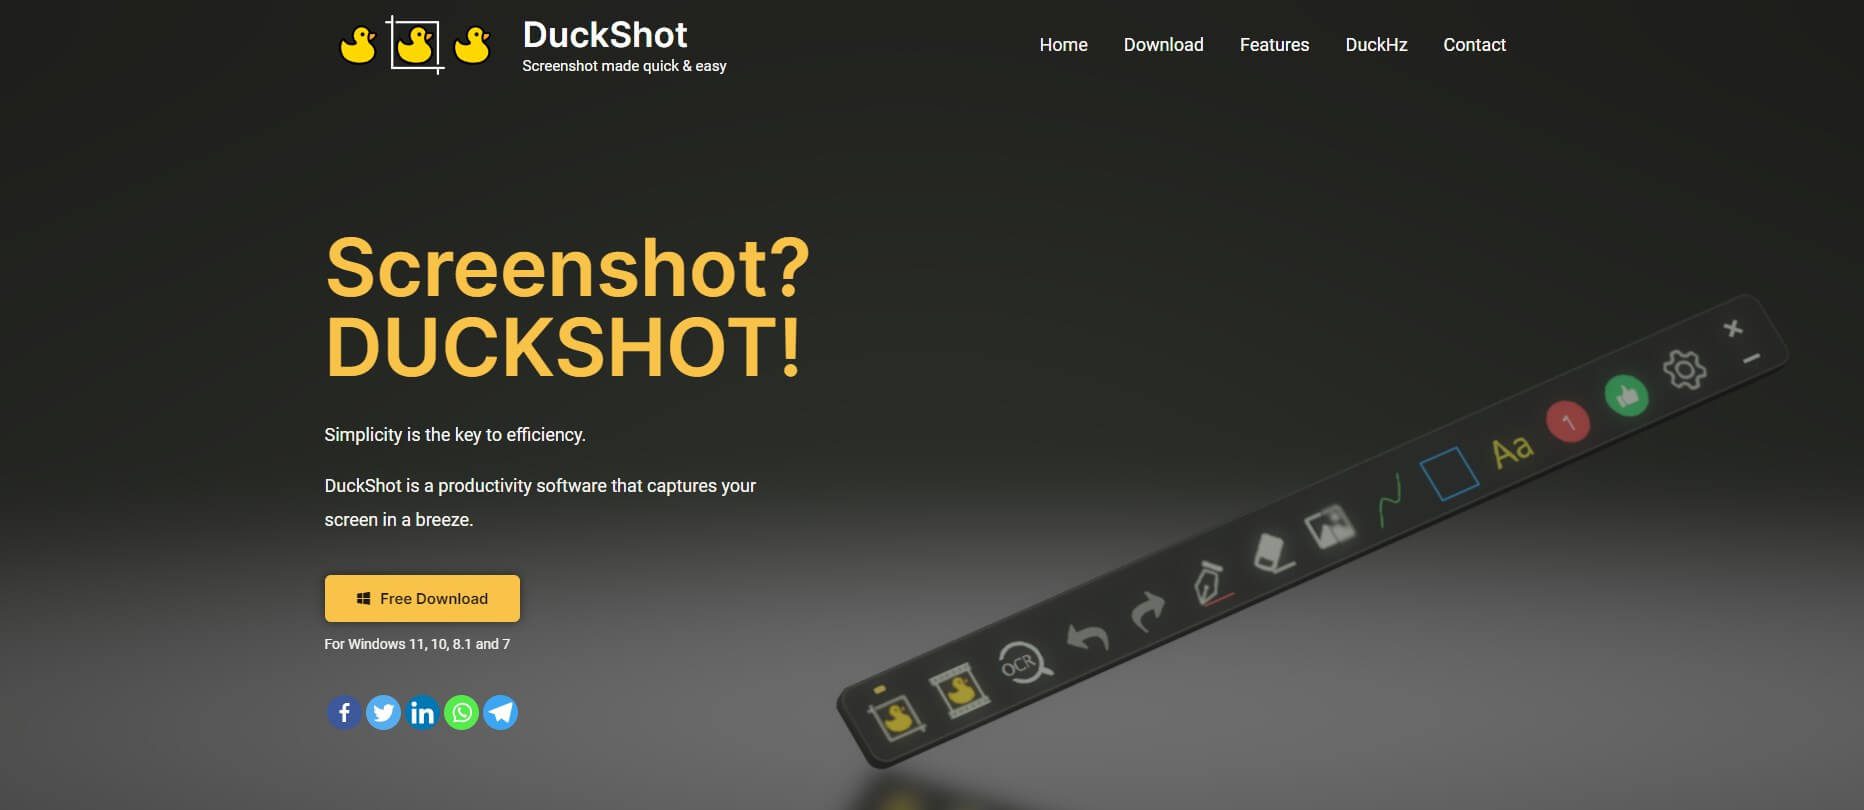 DuckShot Interface